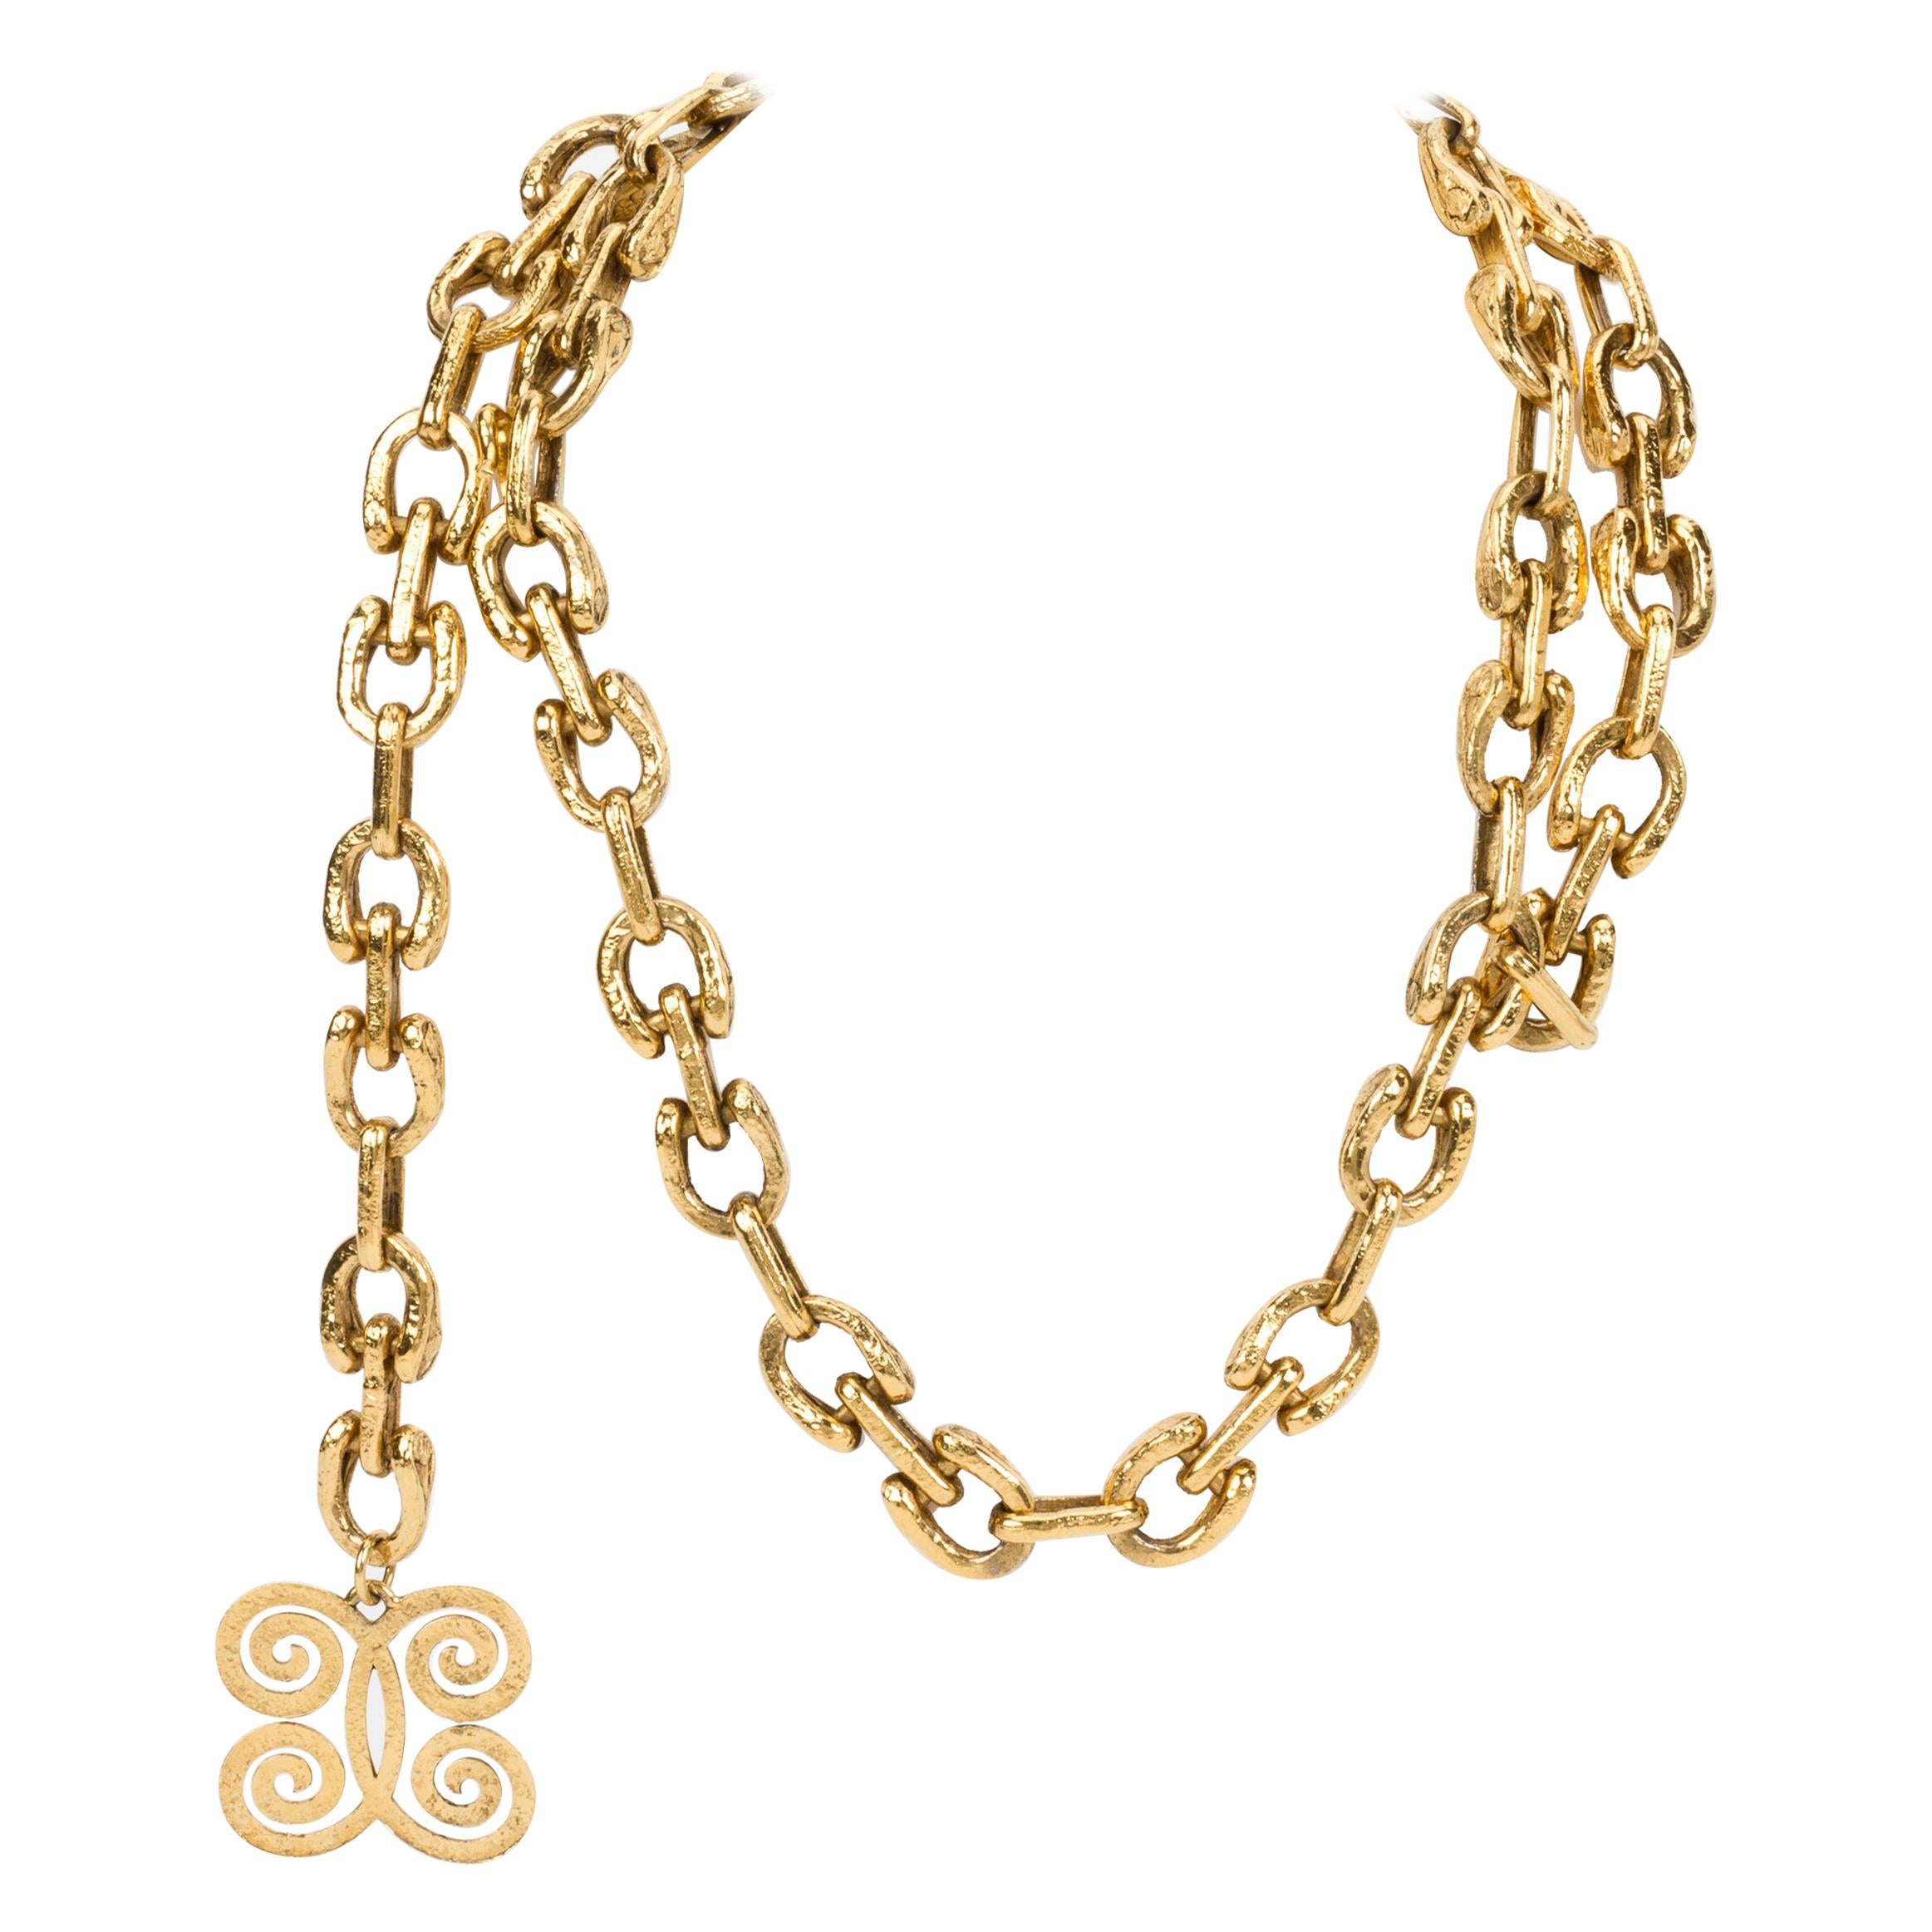 1970's Vintage Chanel Gold Chain Belt Necklace